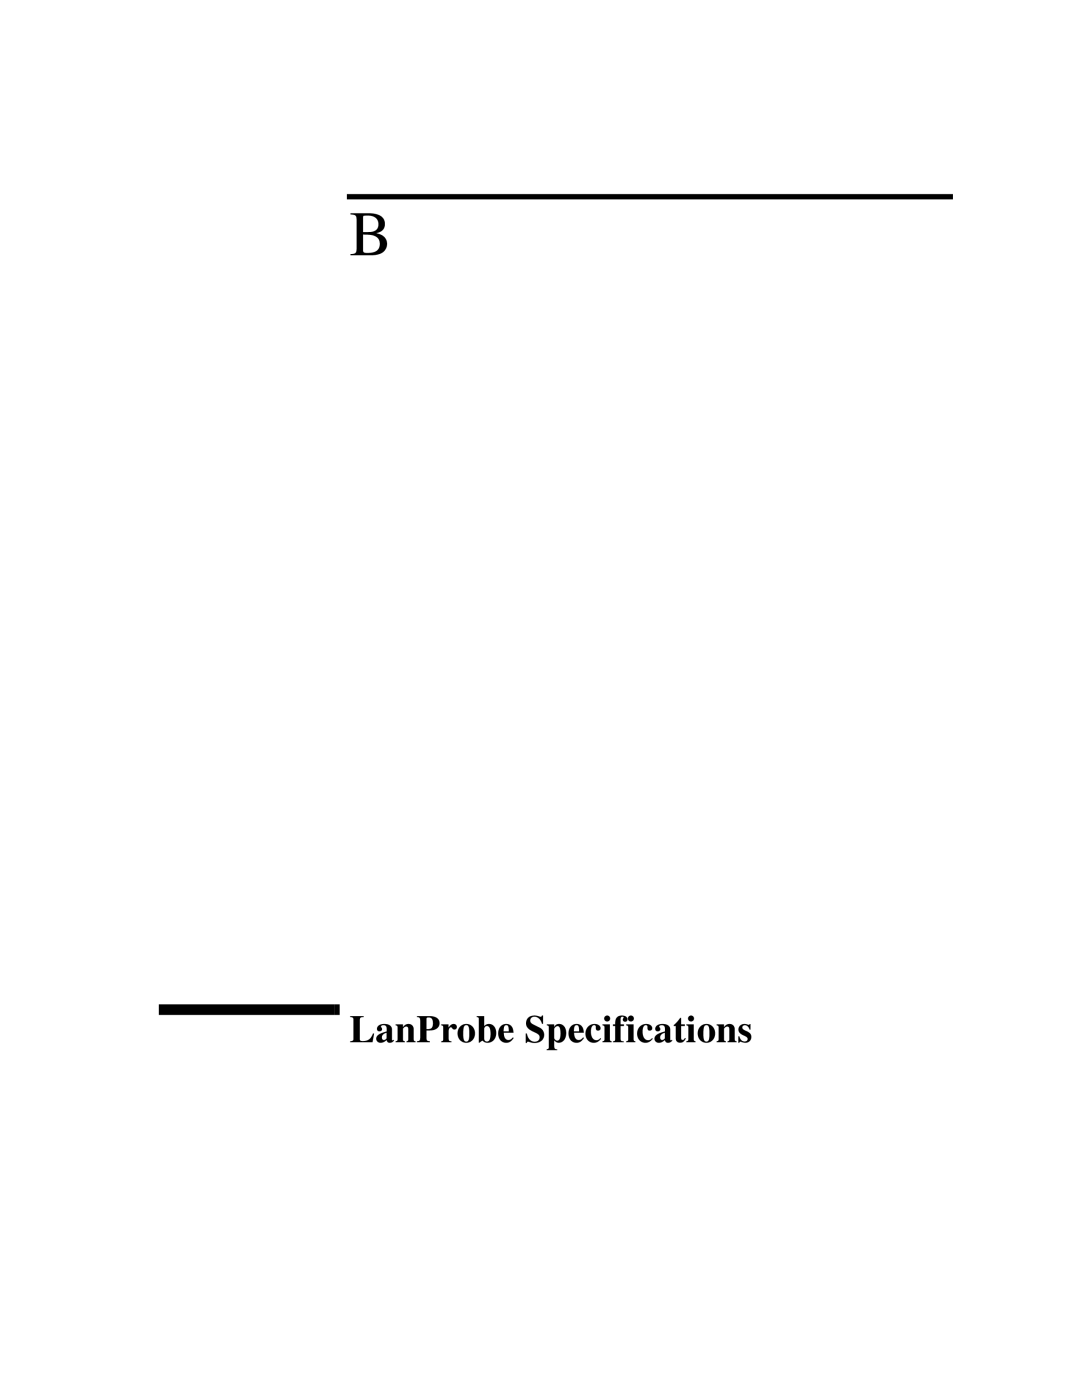 IBM 4986B LanProbe manual LanProbe Specifications 